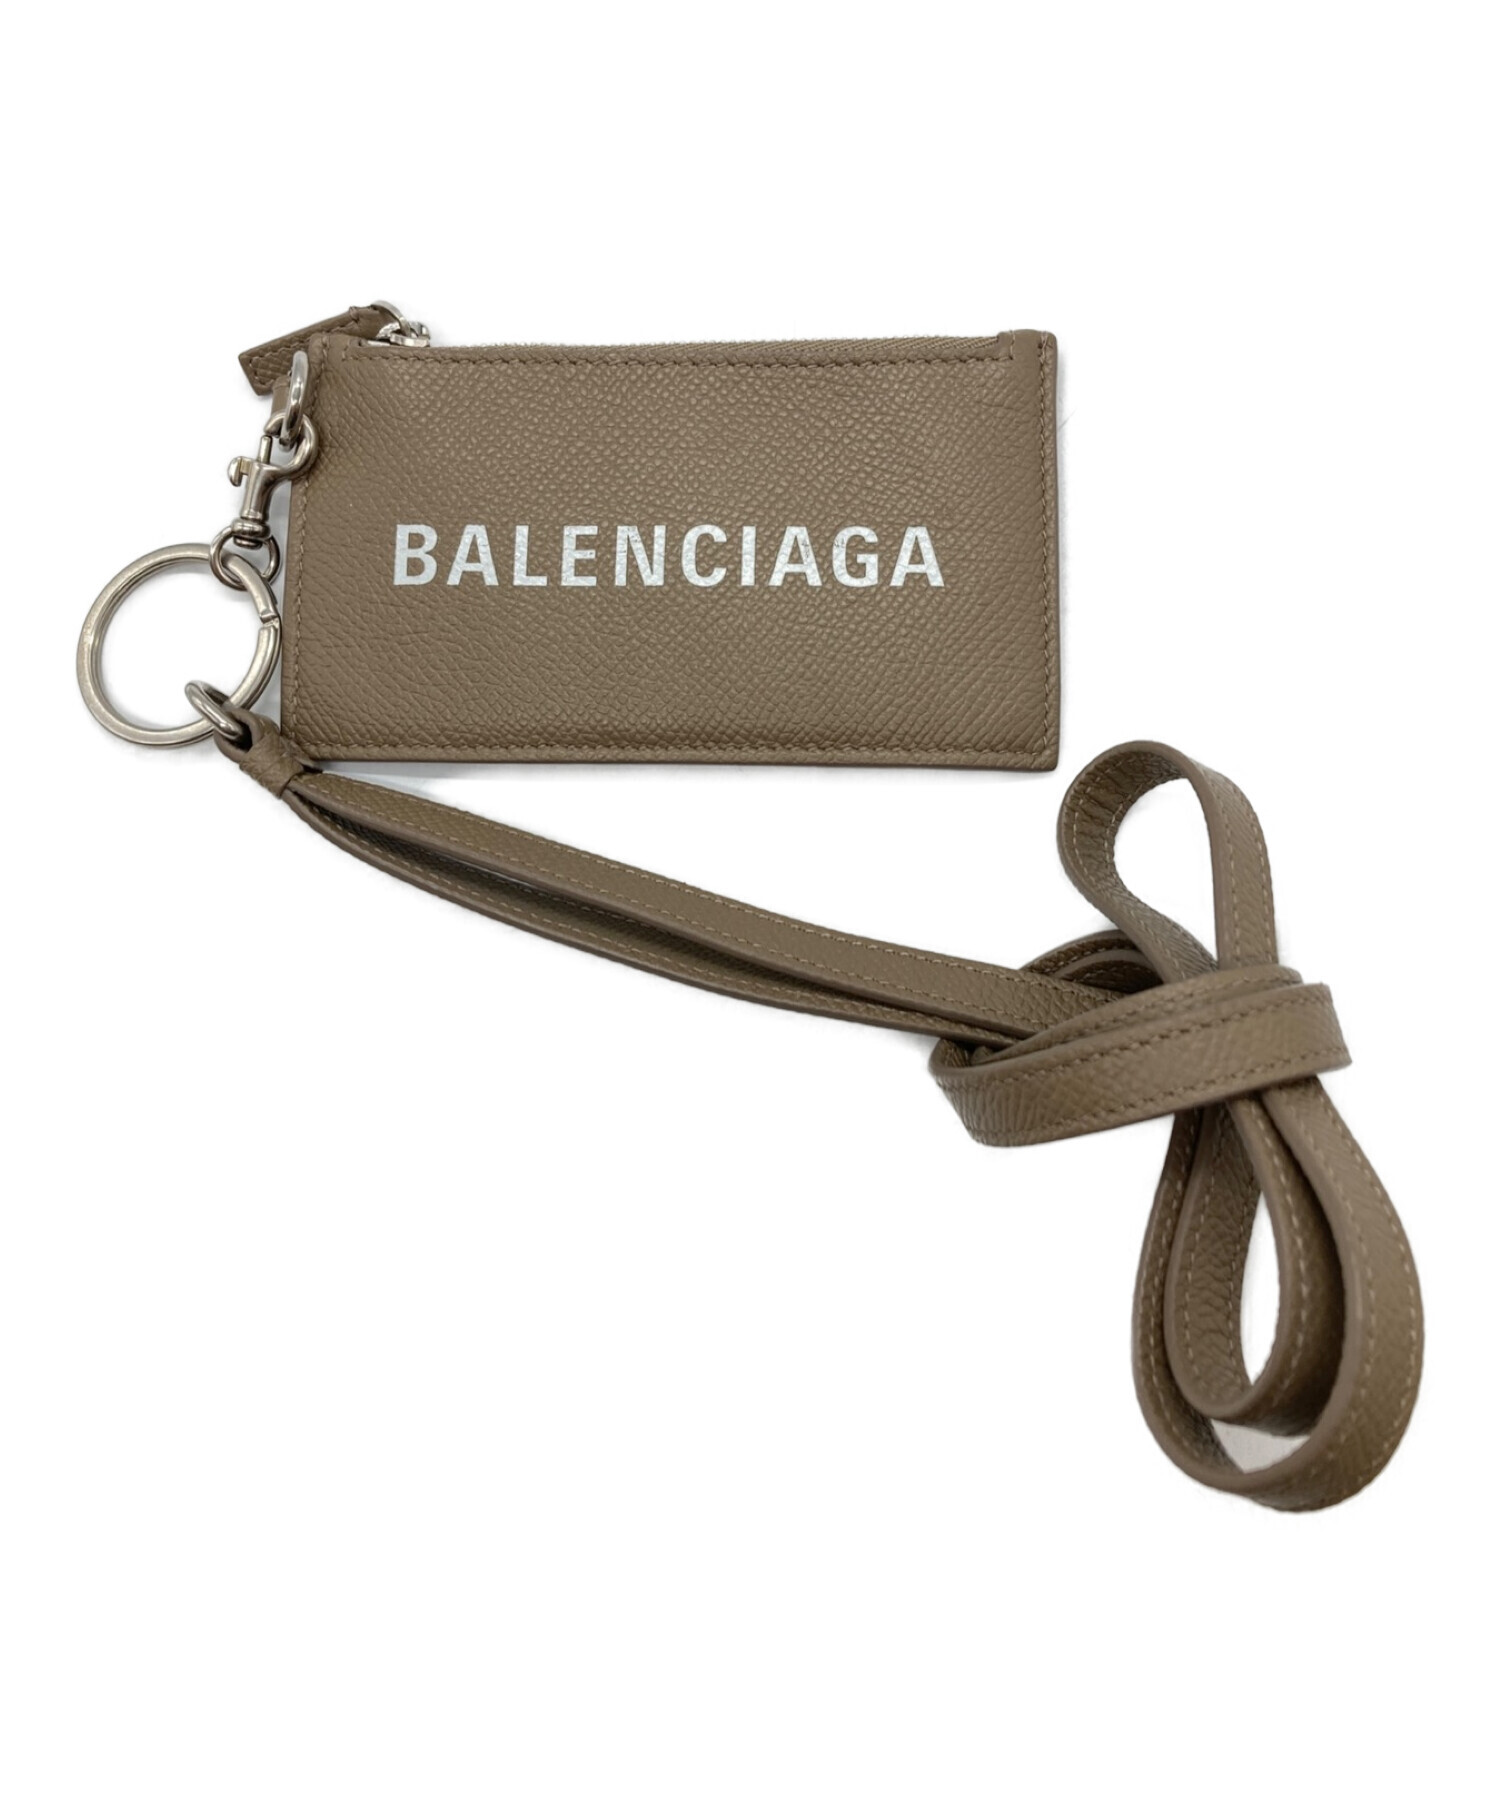 BALENCIAGA (バレンシアガ) ネックストラップコインケース ベージュ